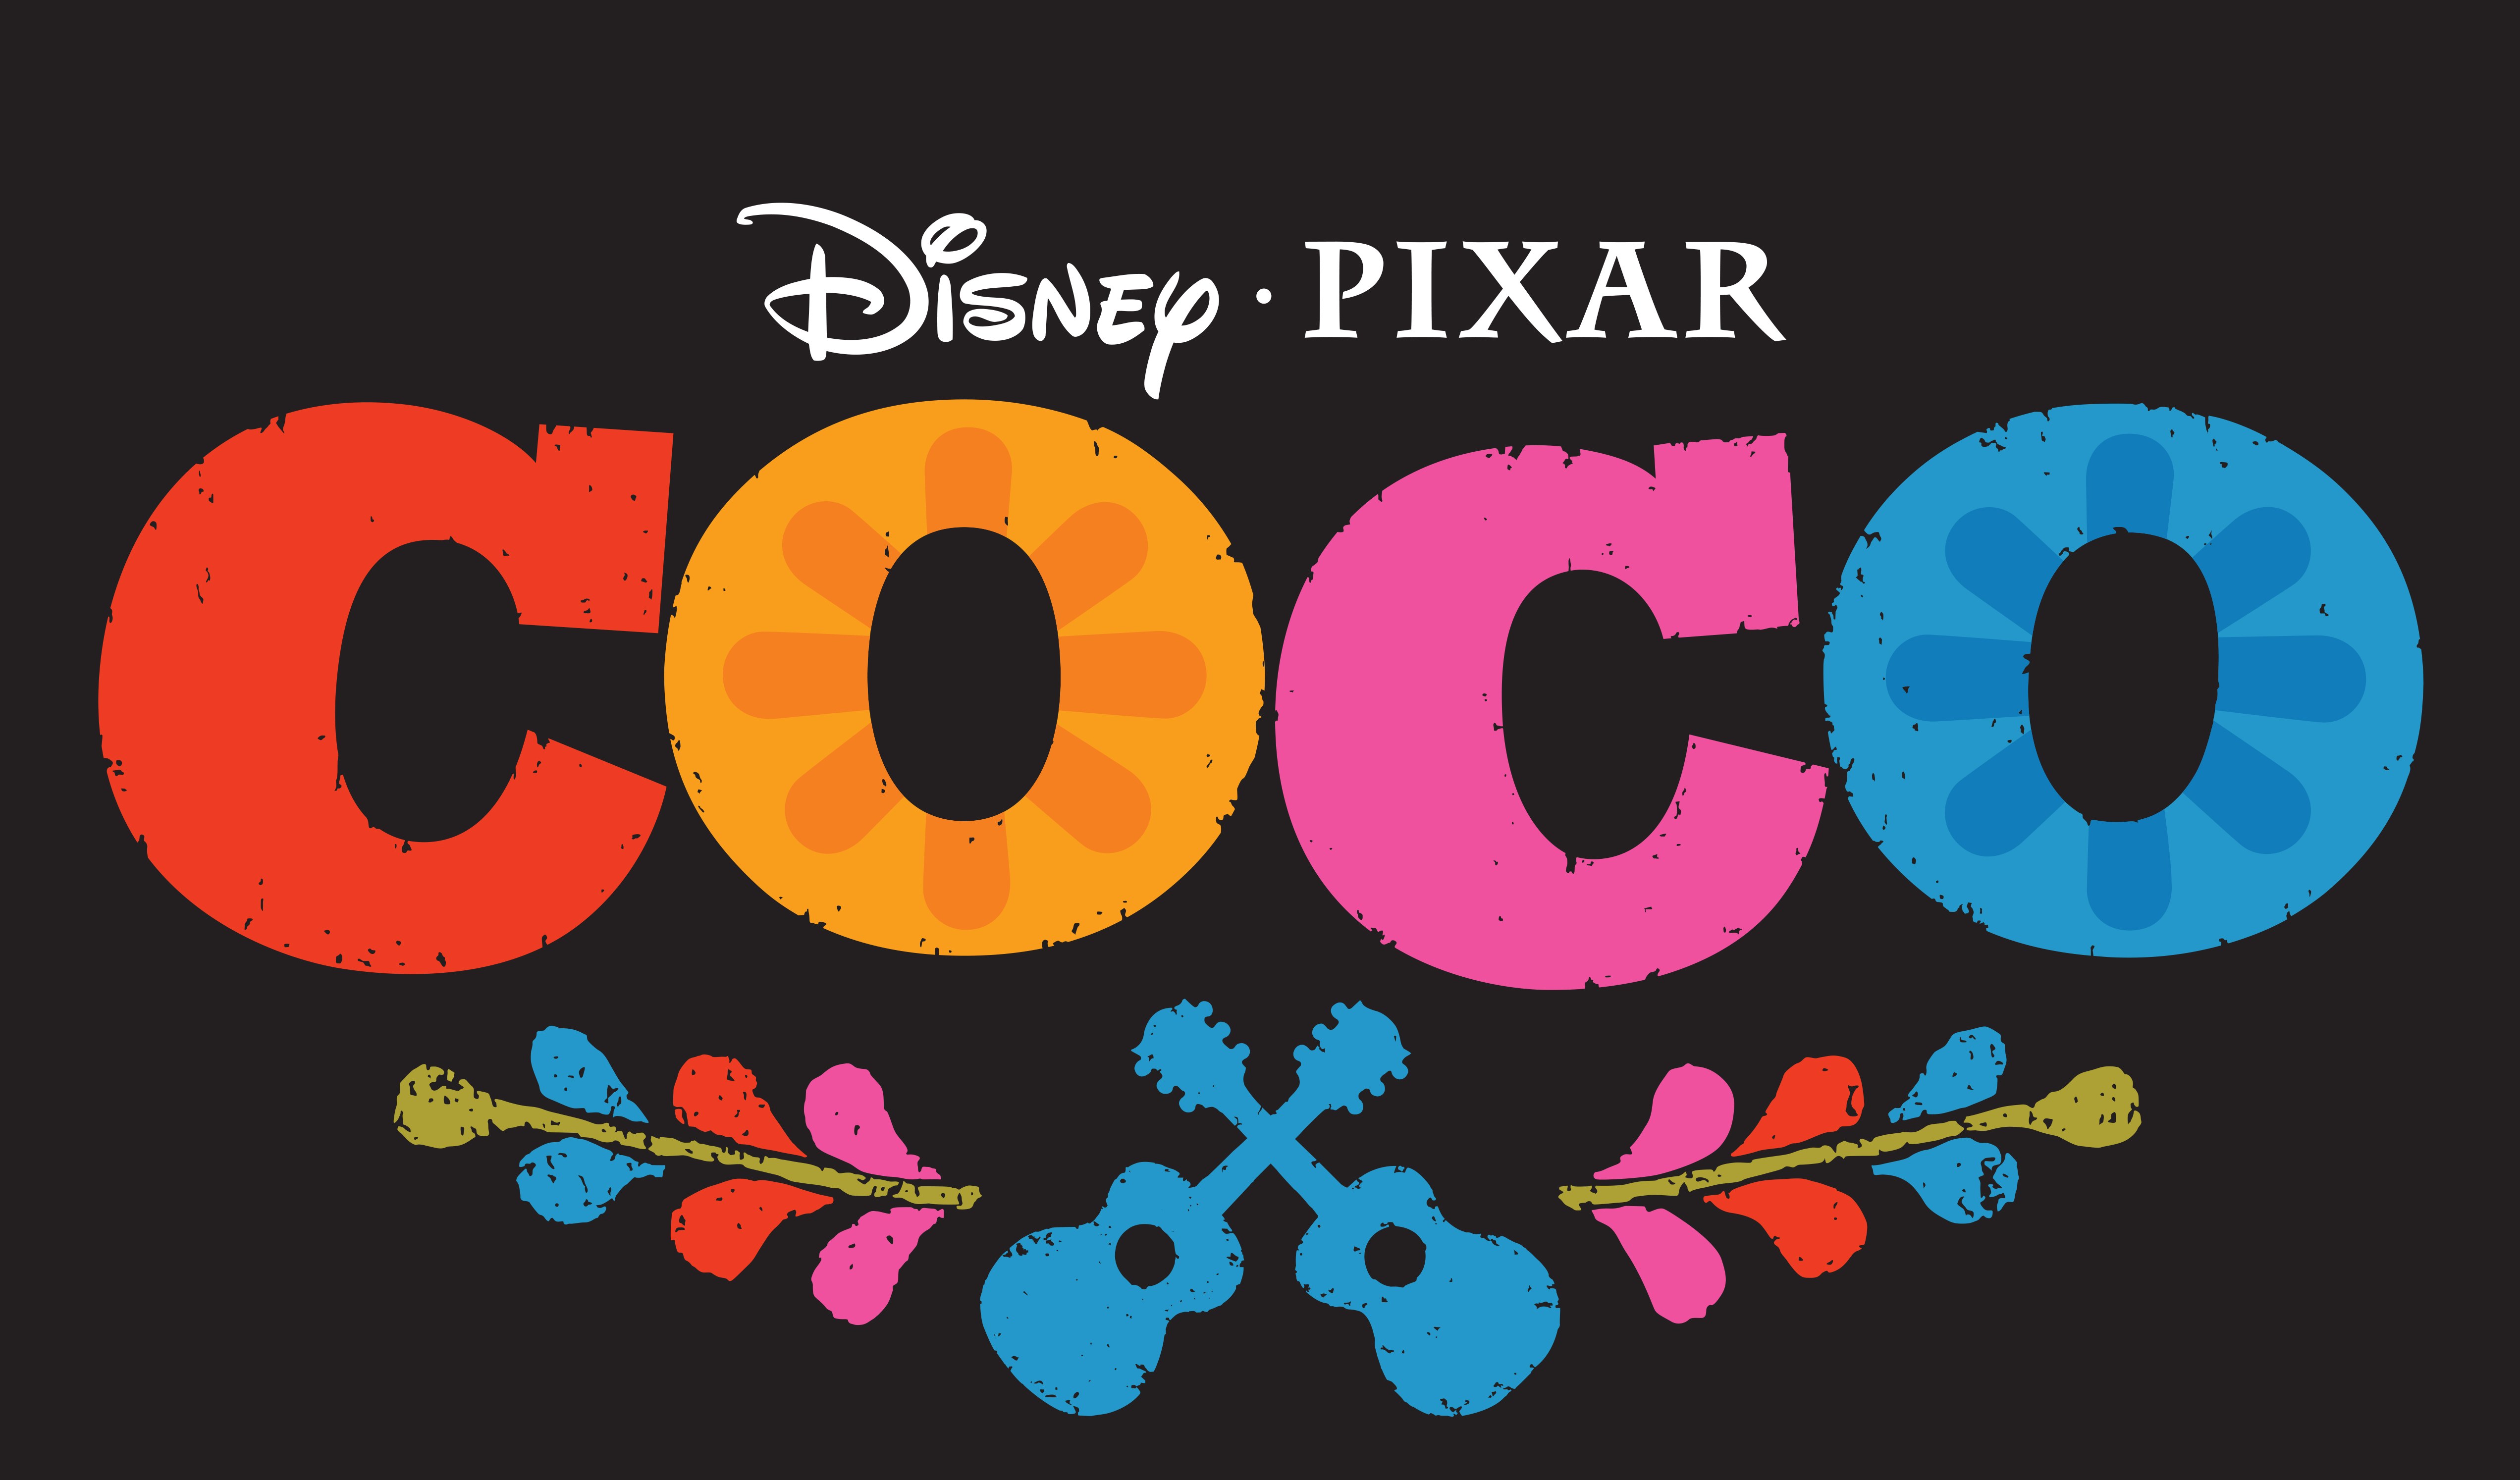 coco-logo-1b-final-color-on-bk-5-23-16.jpg